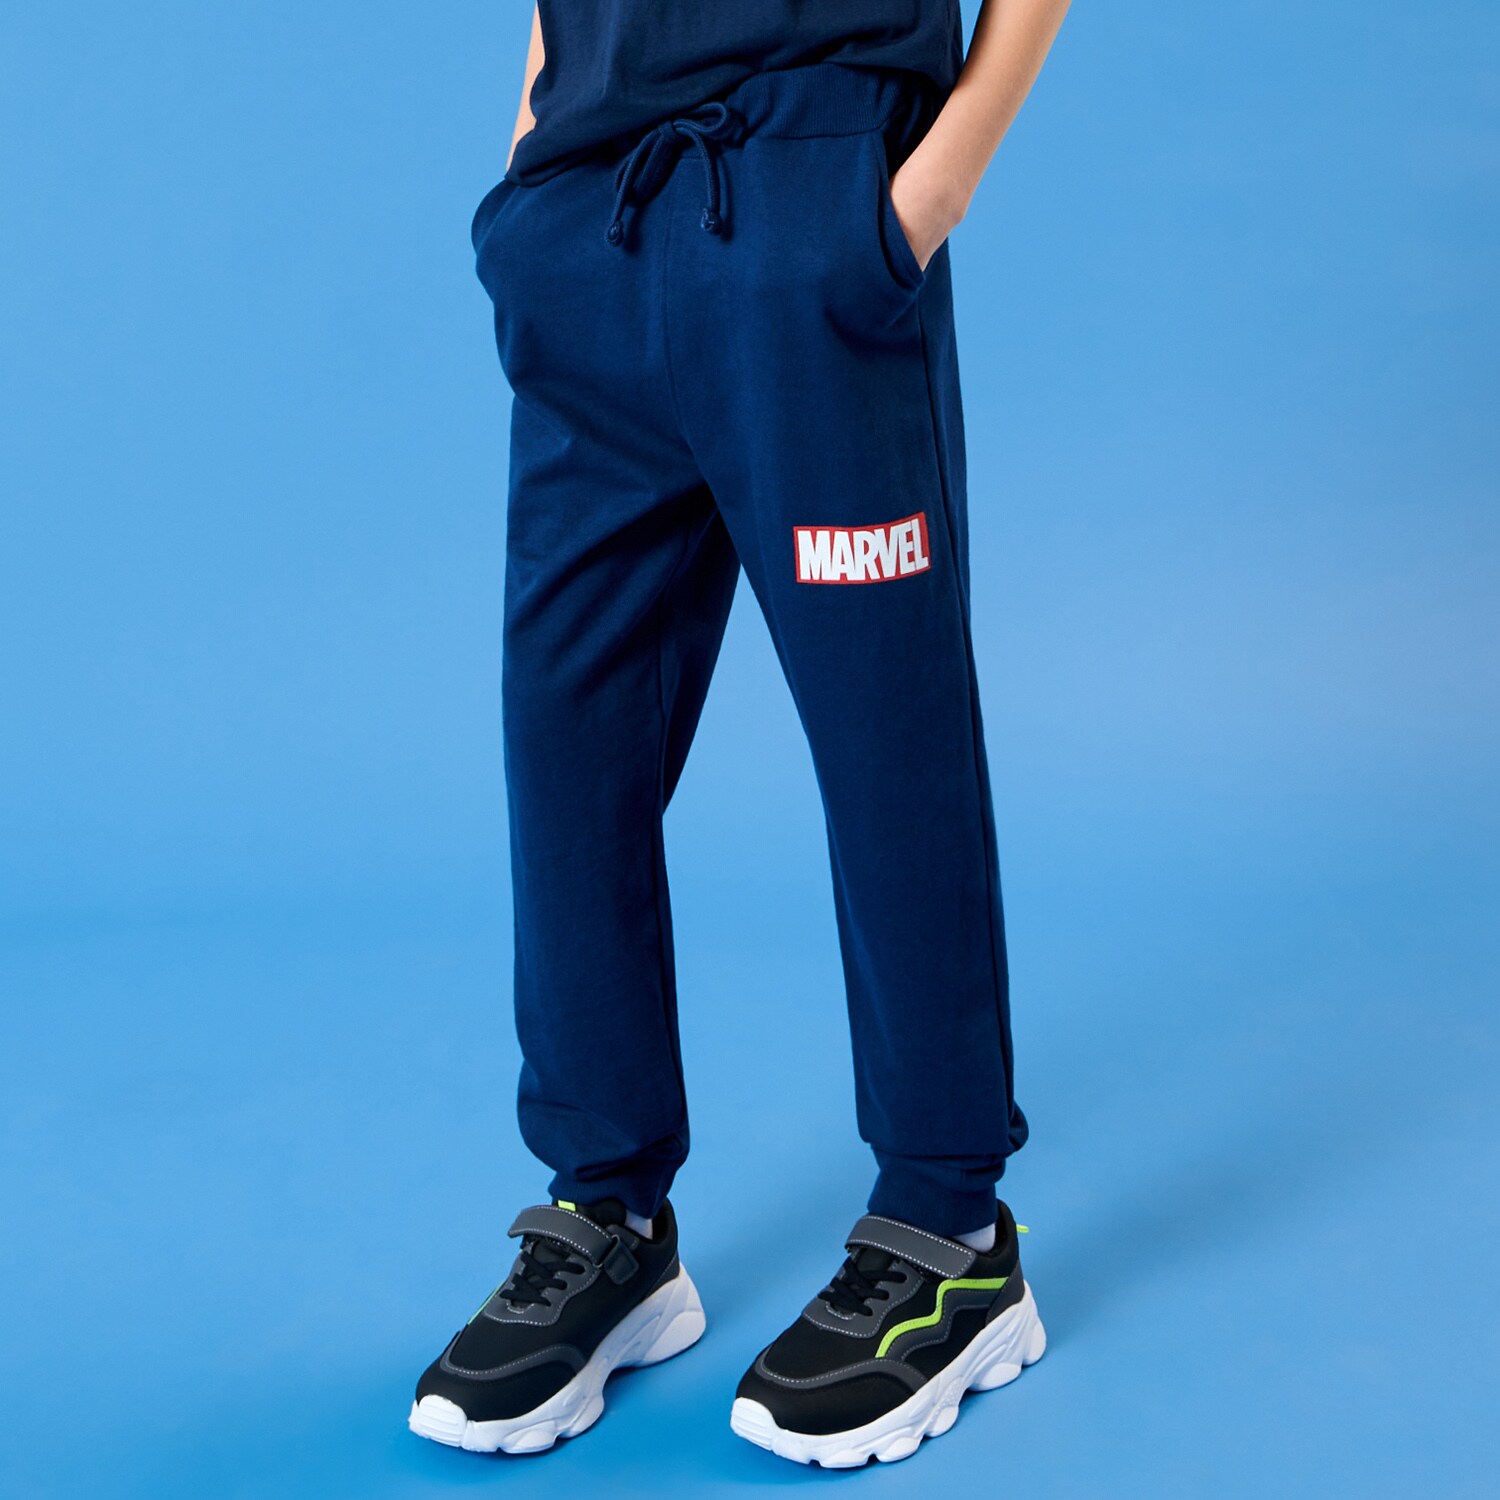 Poze Pantaloni jogger sport Marvel - Bleumarin sinsay.com/ro 